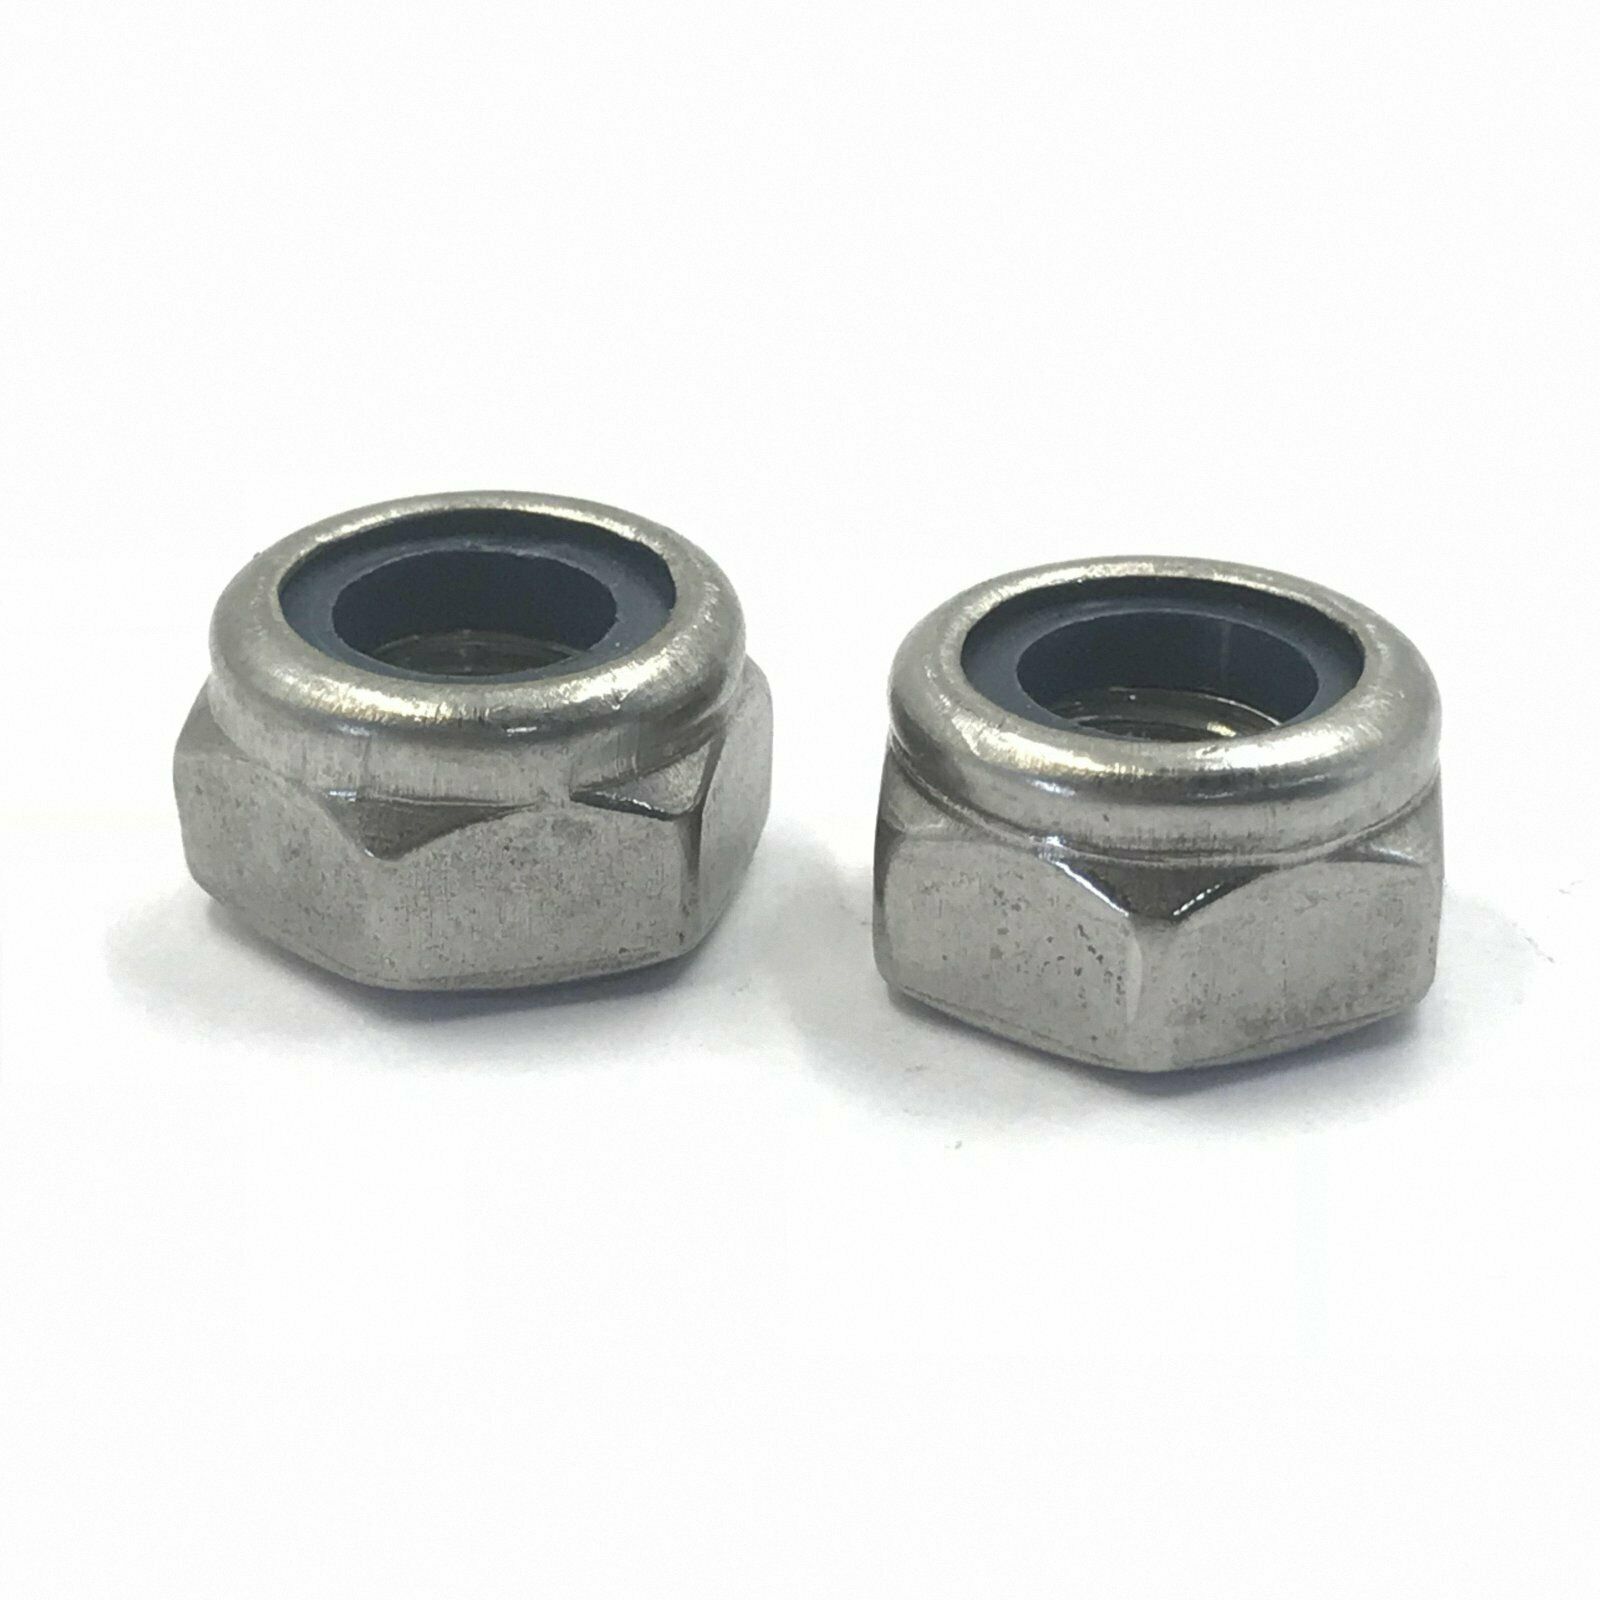 M12 x 1.75 Stainless Steel Nylon Lock Hex Nut Right Hand Thread 12Pcs [M1]